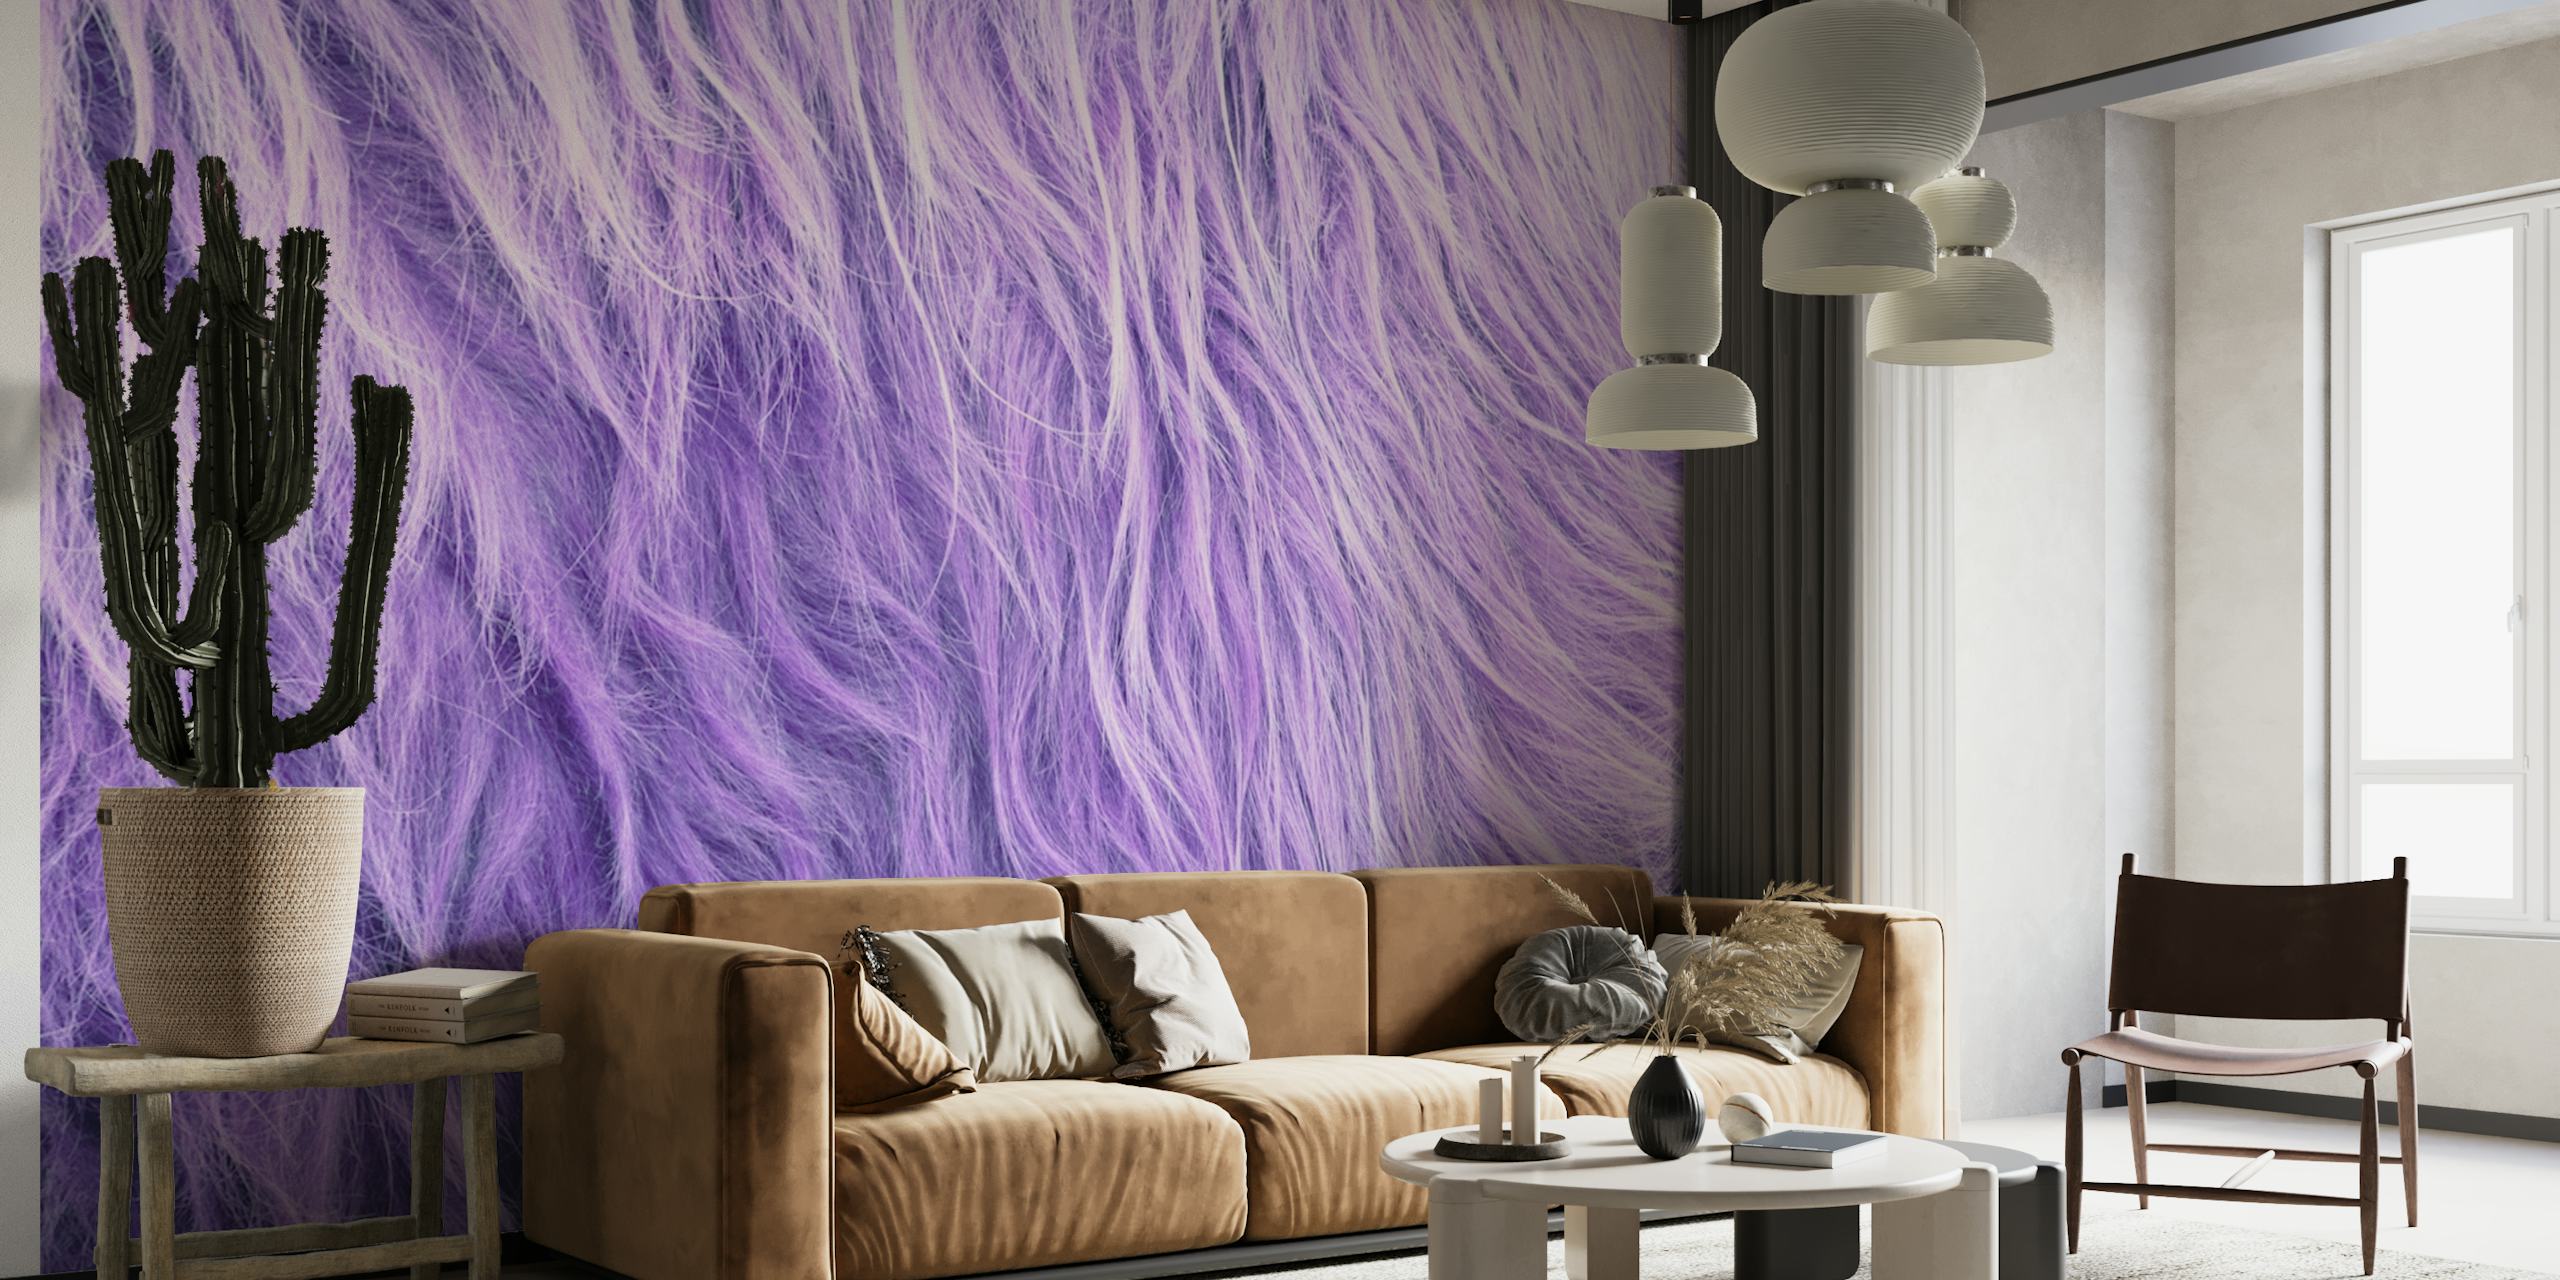 Textured purple faux fur wall mural resembling Highland cow fur